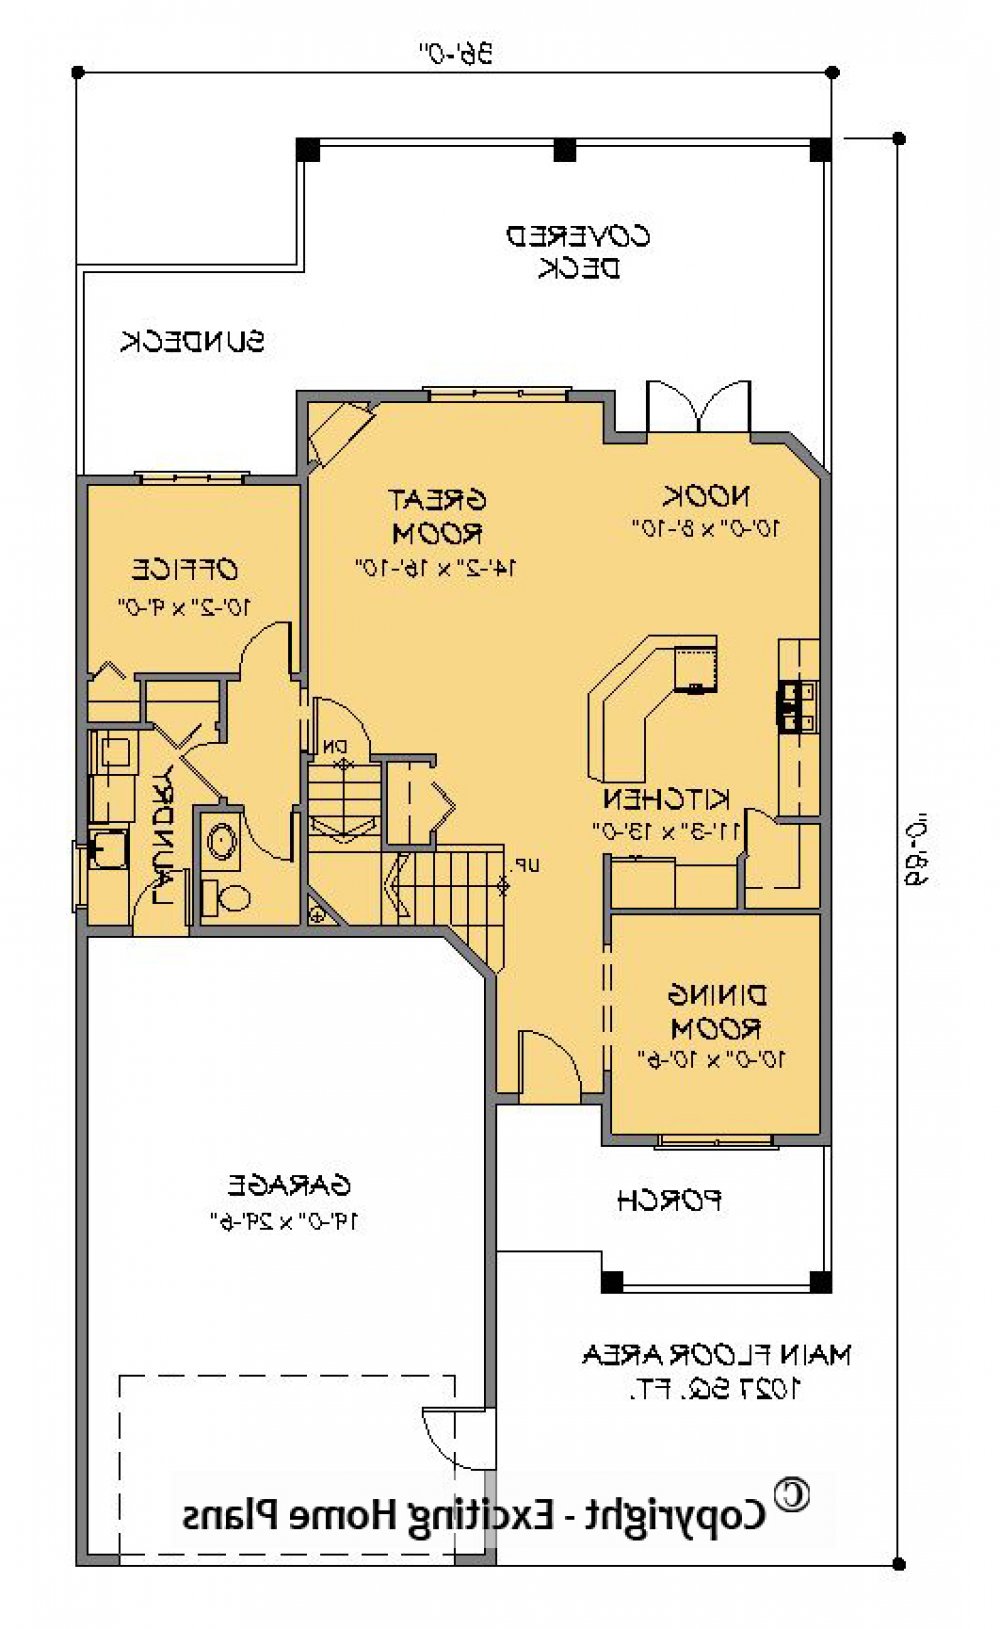 House Plan E1187-10  Main Floor Plan REVERSE